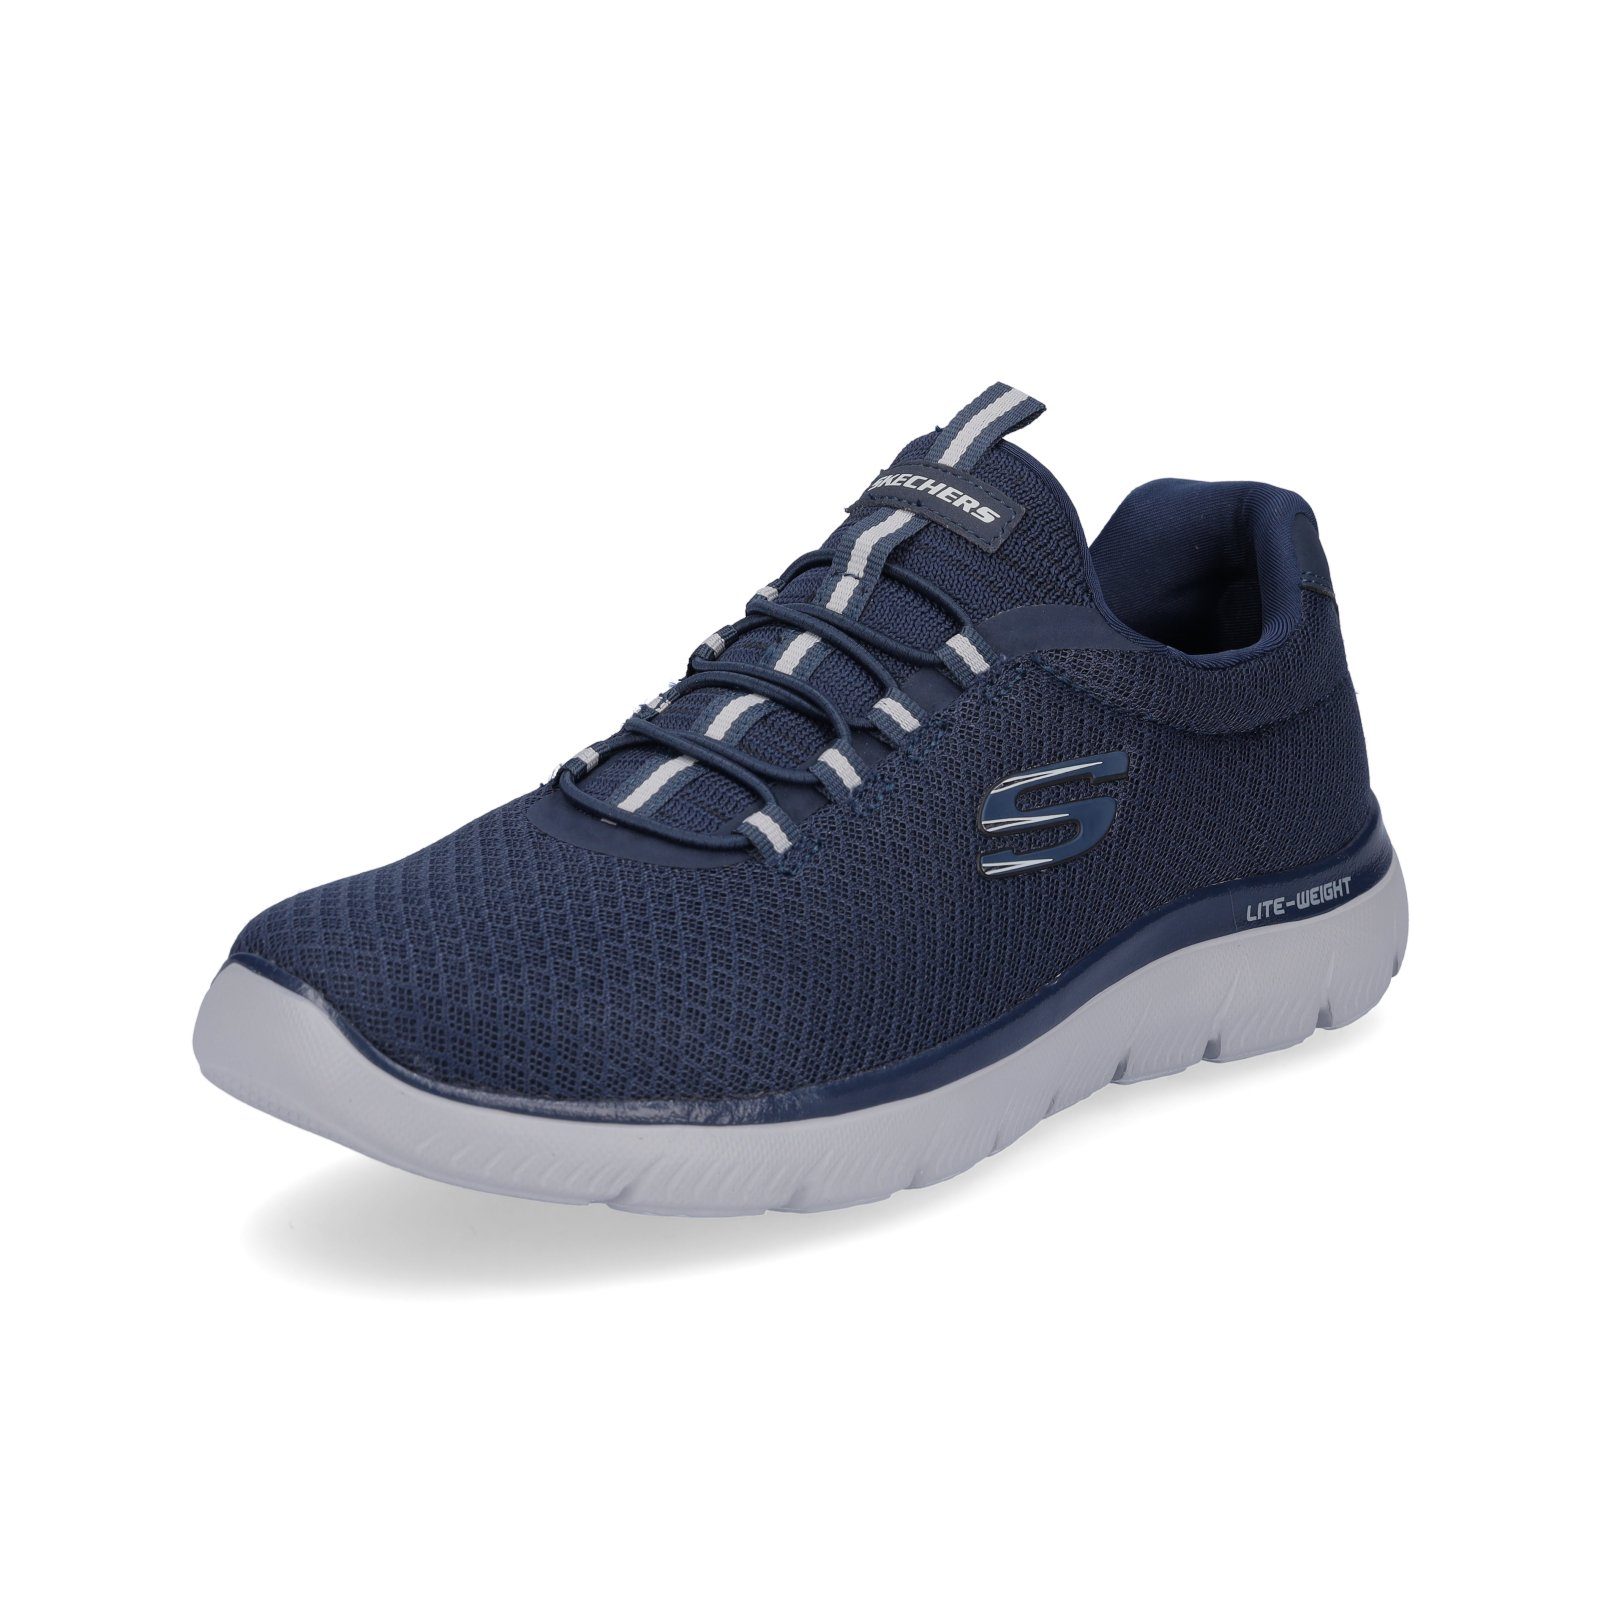 Skechers Skechers Herren Sneaker blau Blau (Navy) (20202125) Sneaker